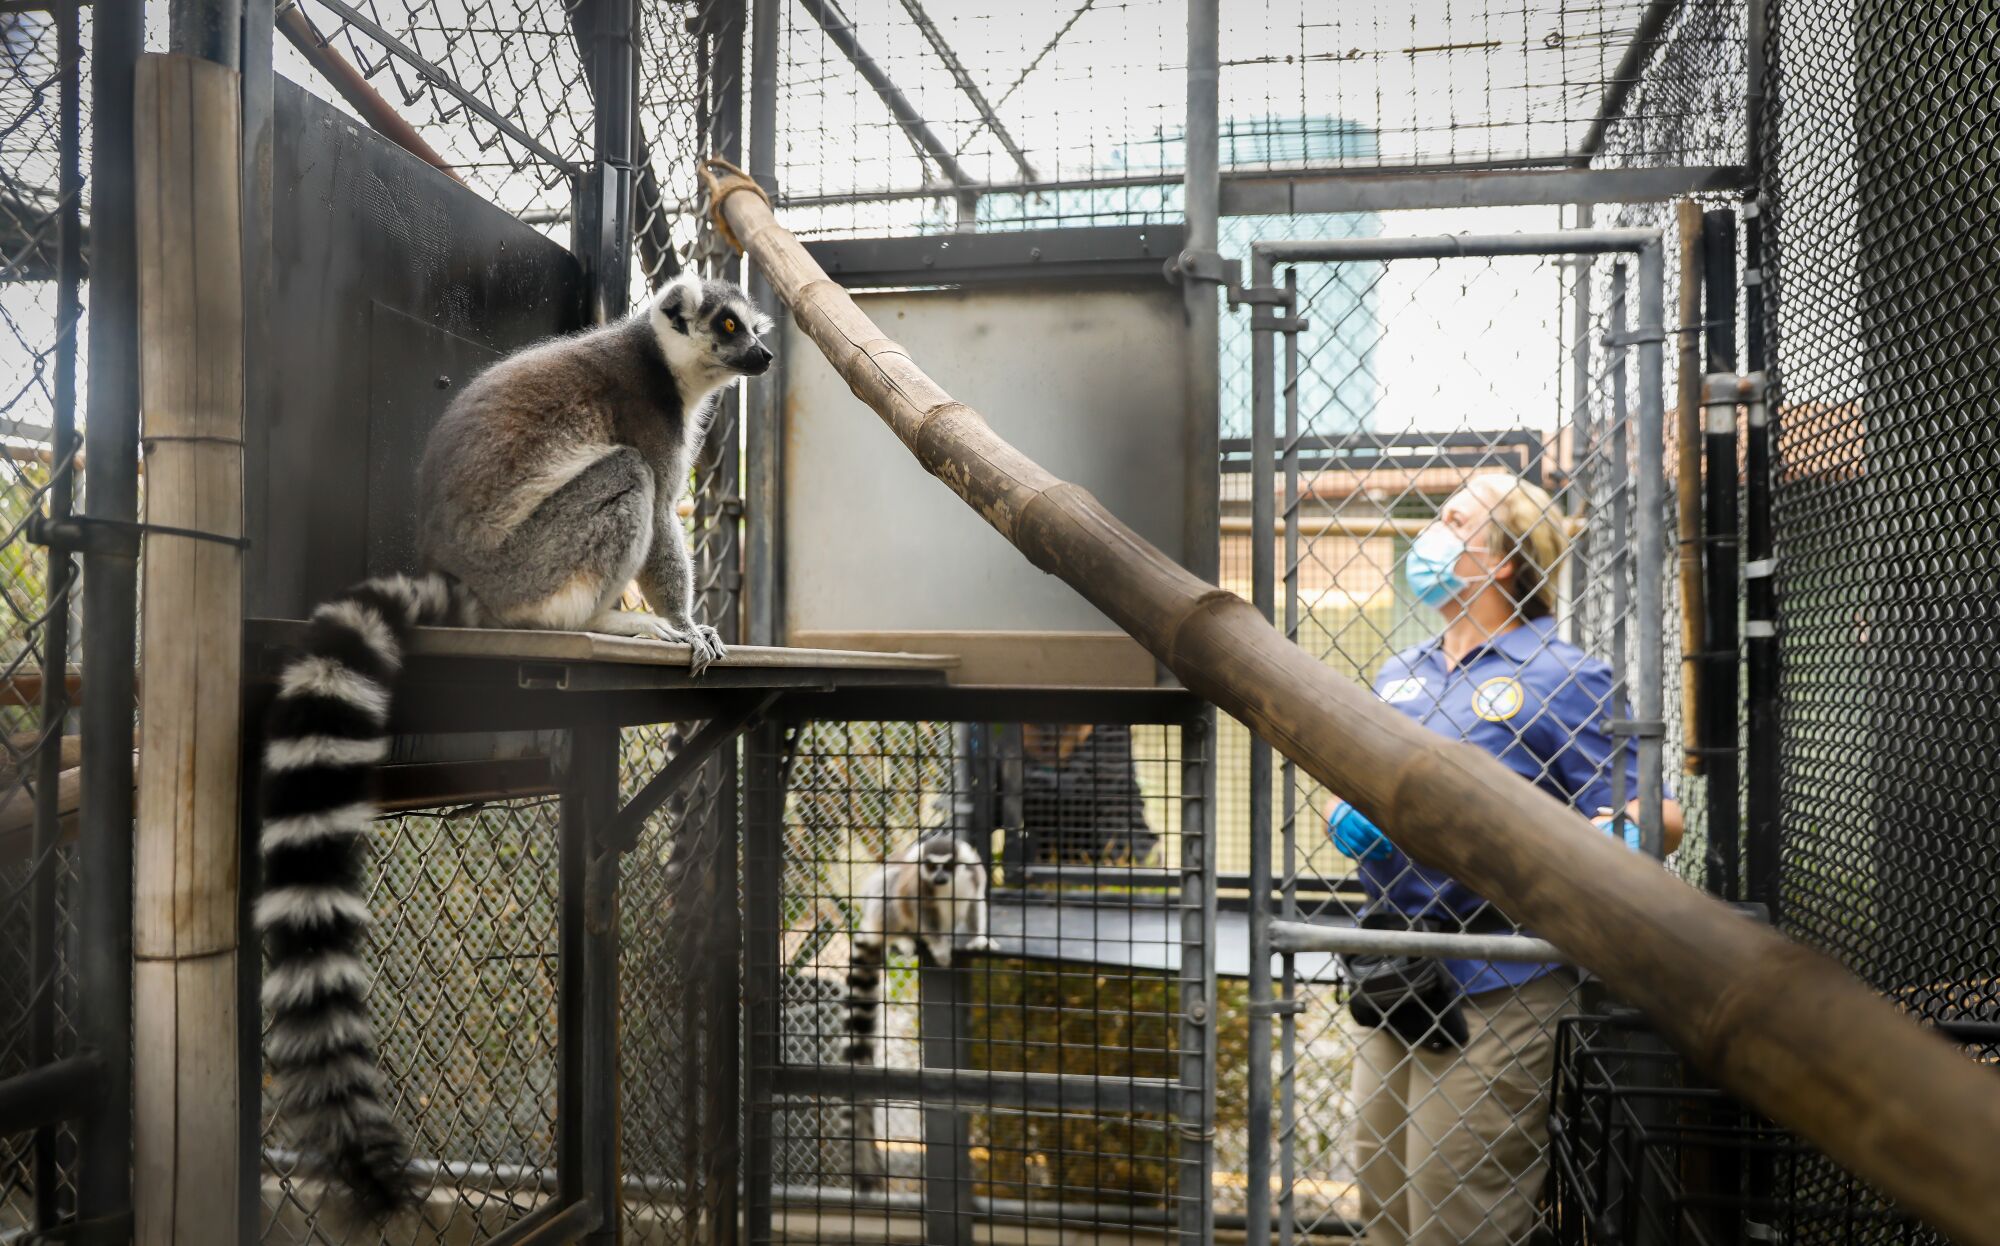 Zoo keeper Paige Siegel checks on Ashley, a ring-tailed lemur, at the Santa Ana Zoo.